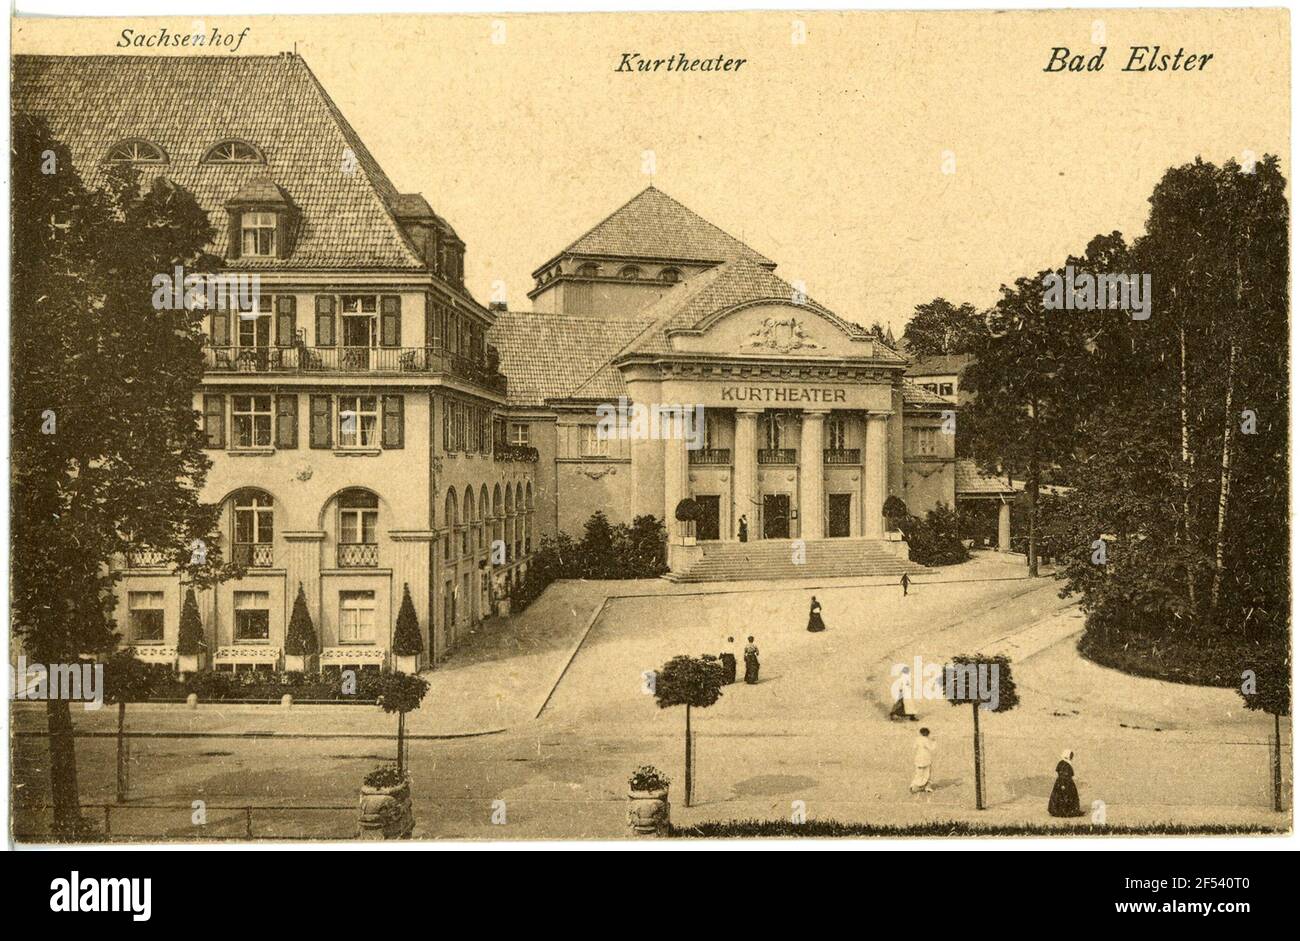 Sachsenhof e Kurtheater Bad Elster. Sachsenhof e Kurtheater Foto Stock